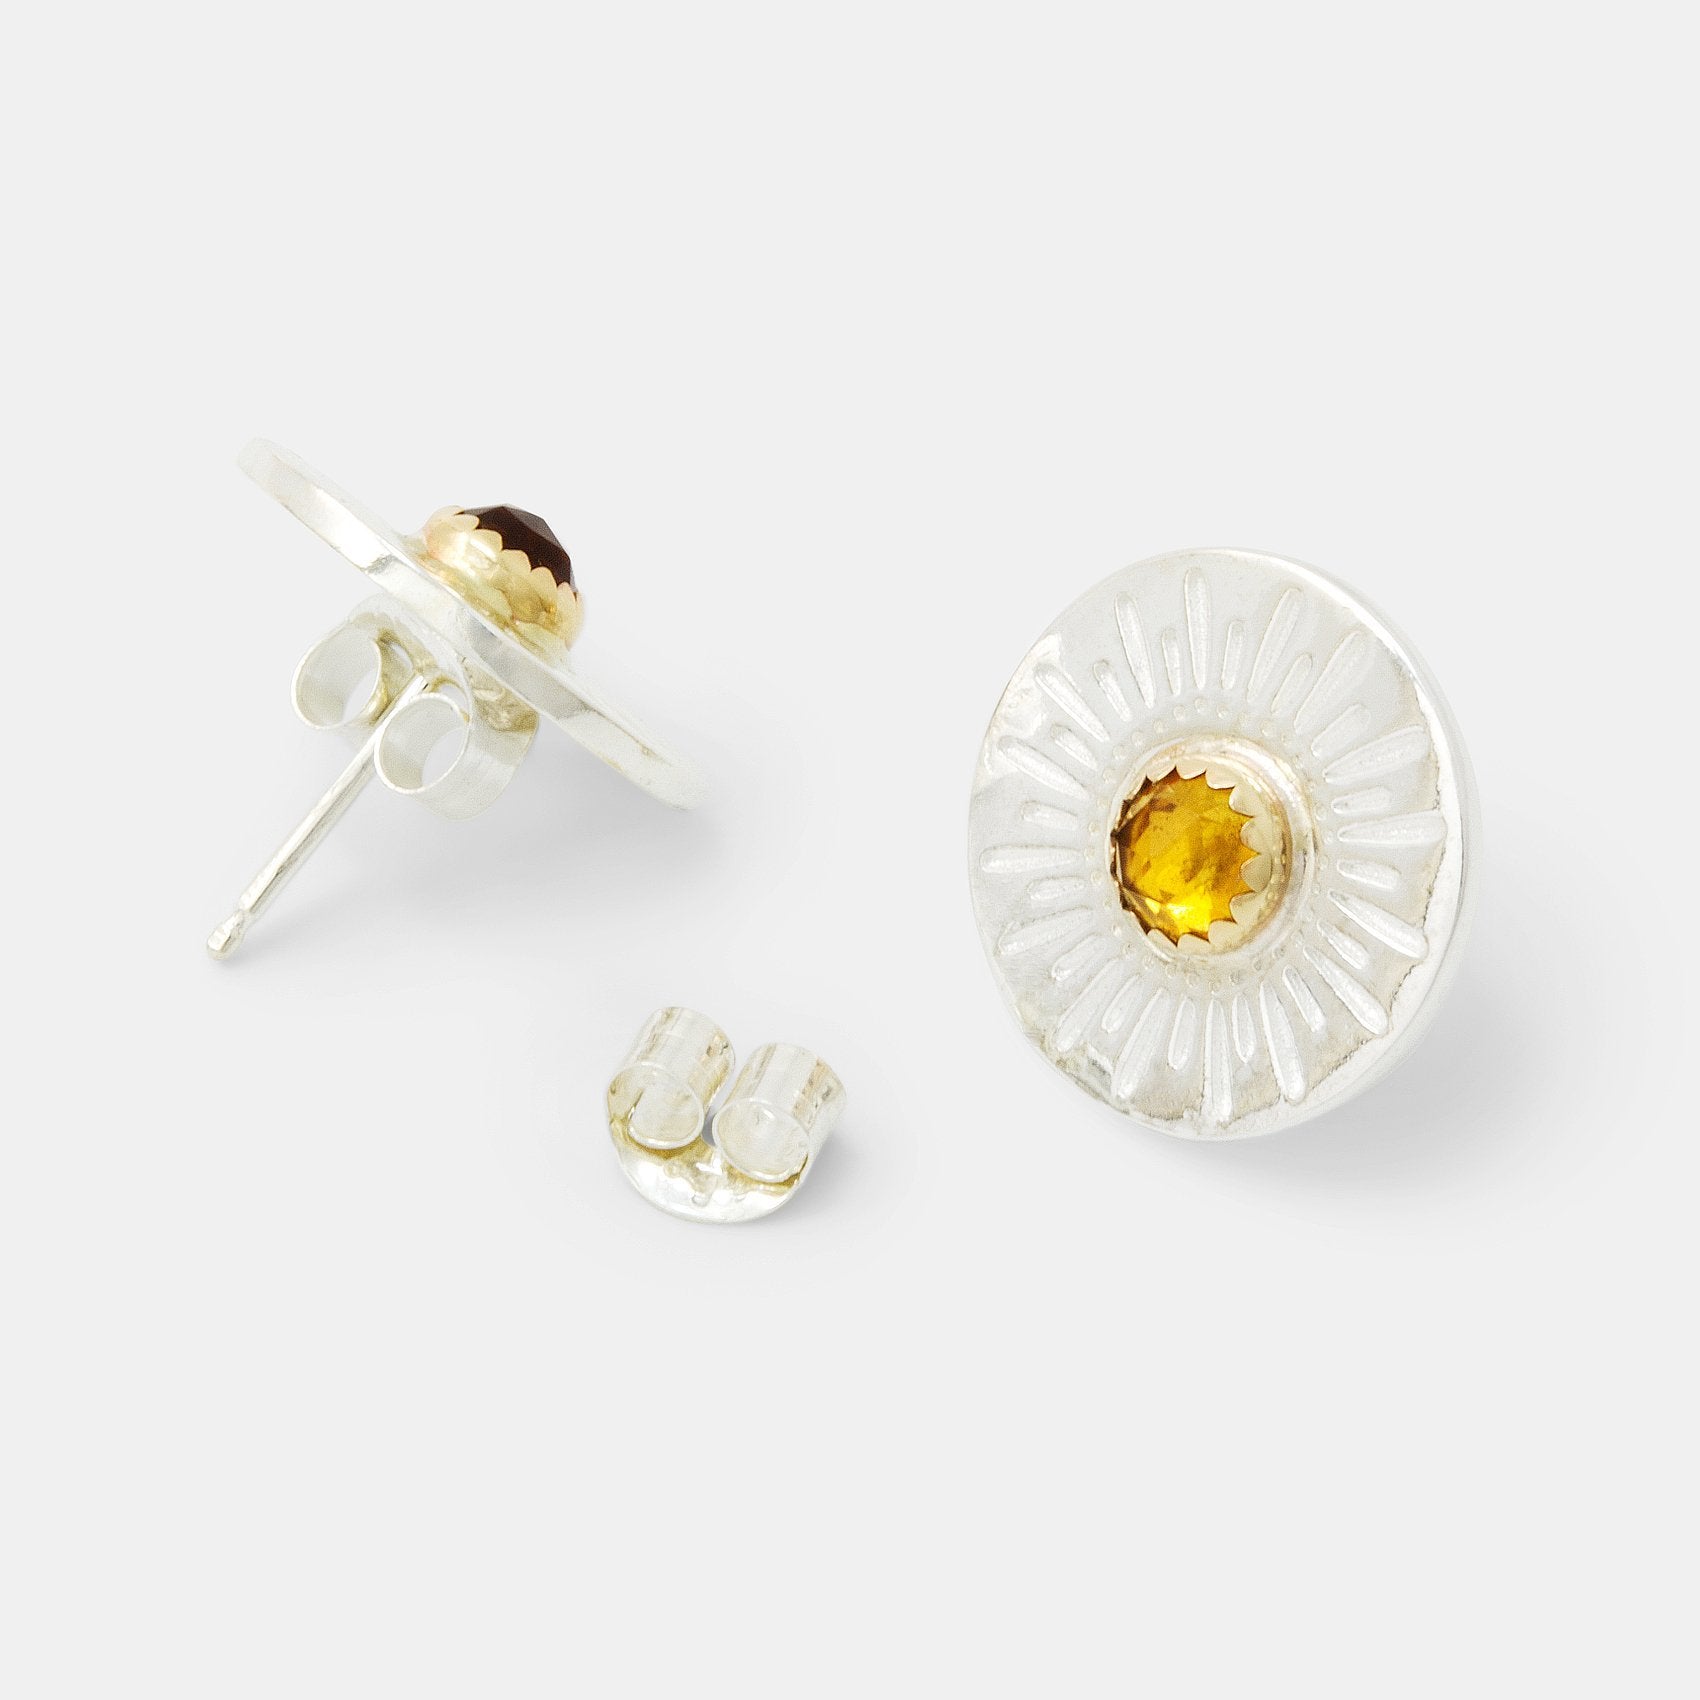 Sunburst & citrine amulet earrings - Simone Walsh Jewellery Australia